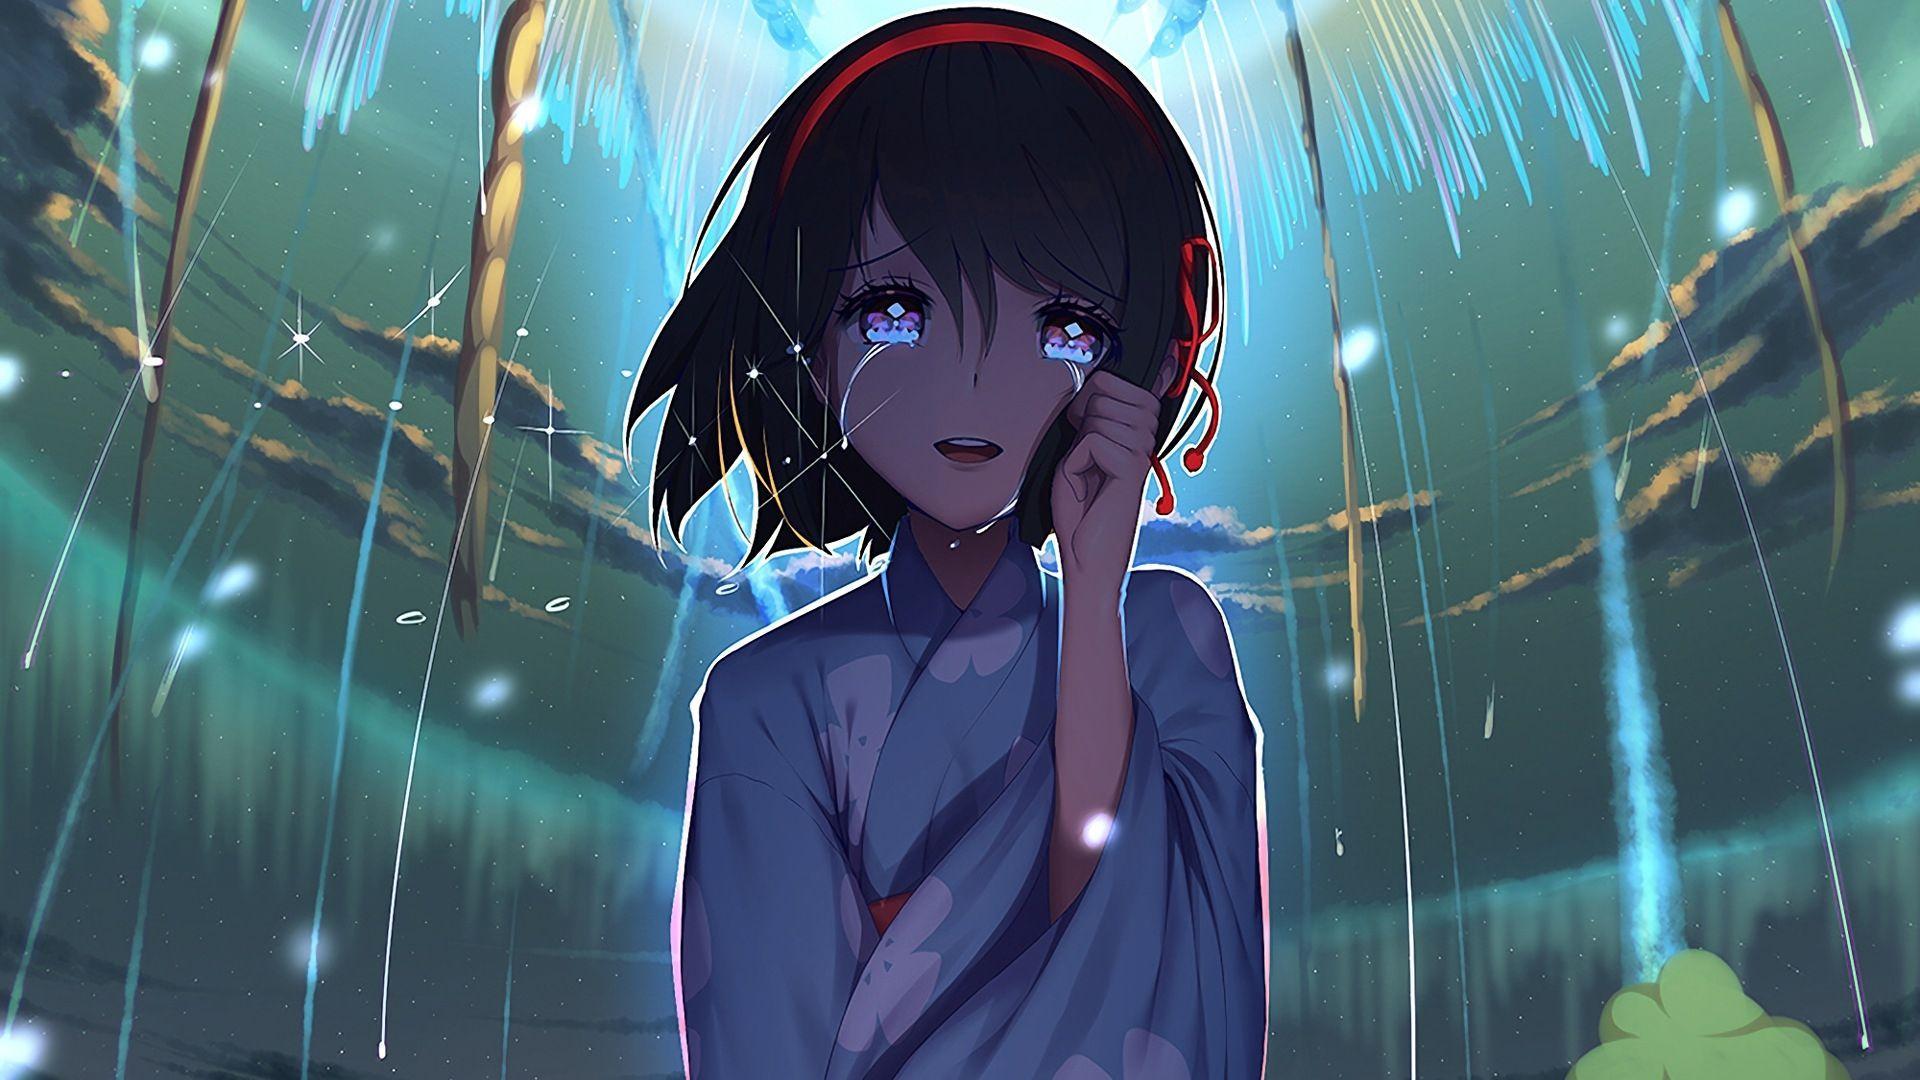 Anime&Art - #Images #Fanart #Anime #AnimeGirl #Cry #sad